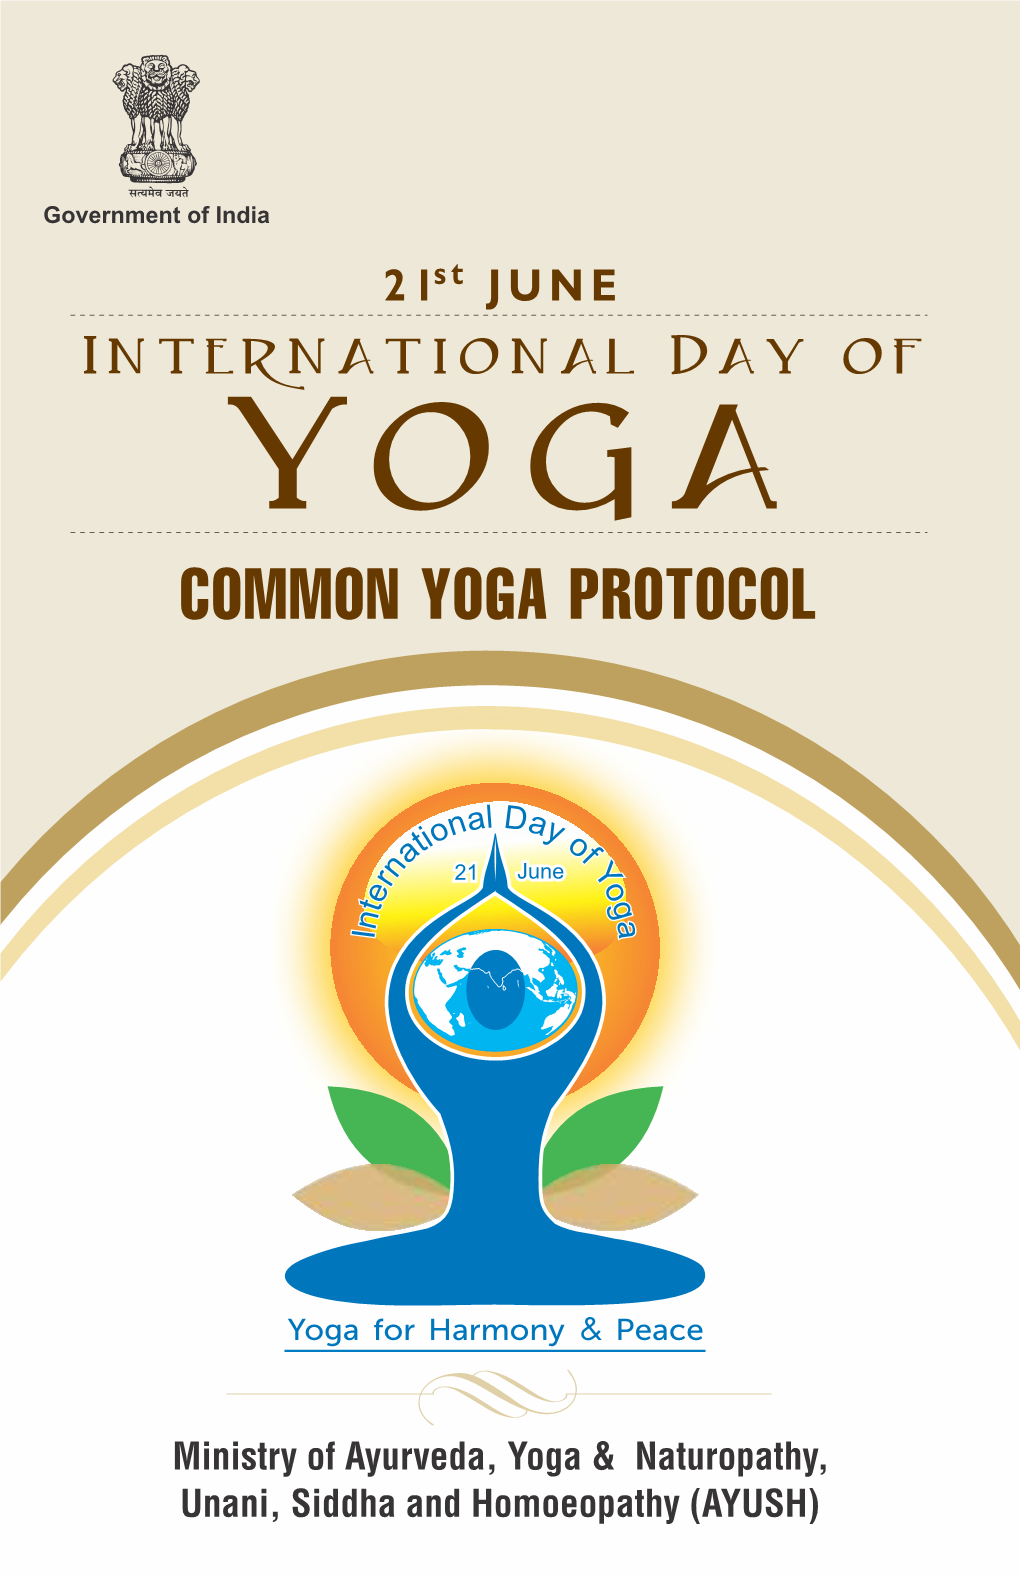 Common Yoga Protocol